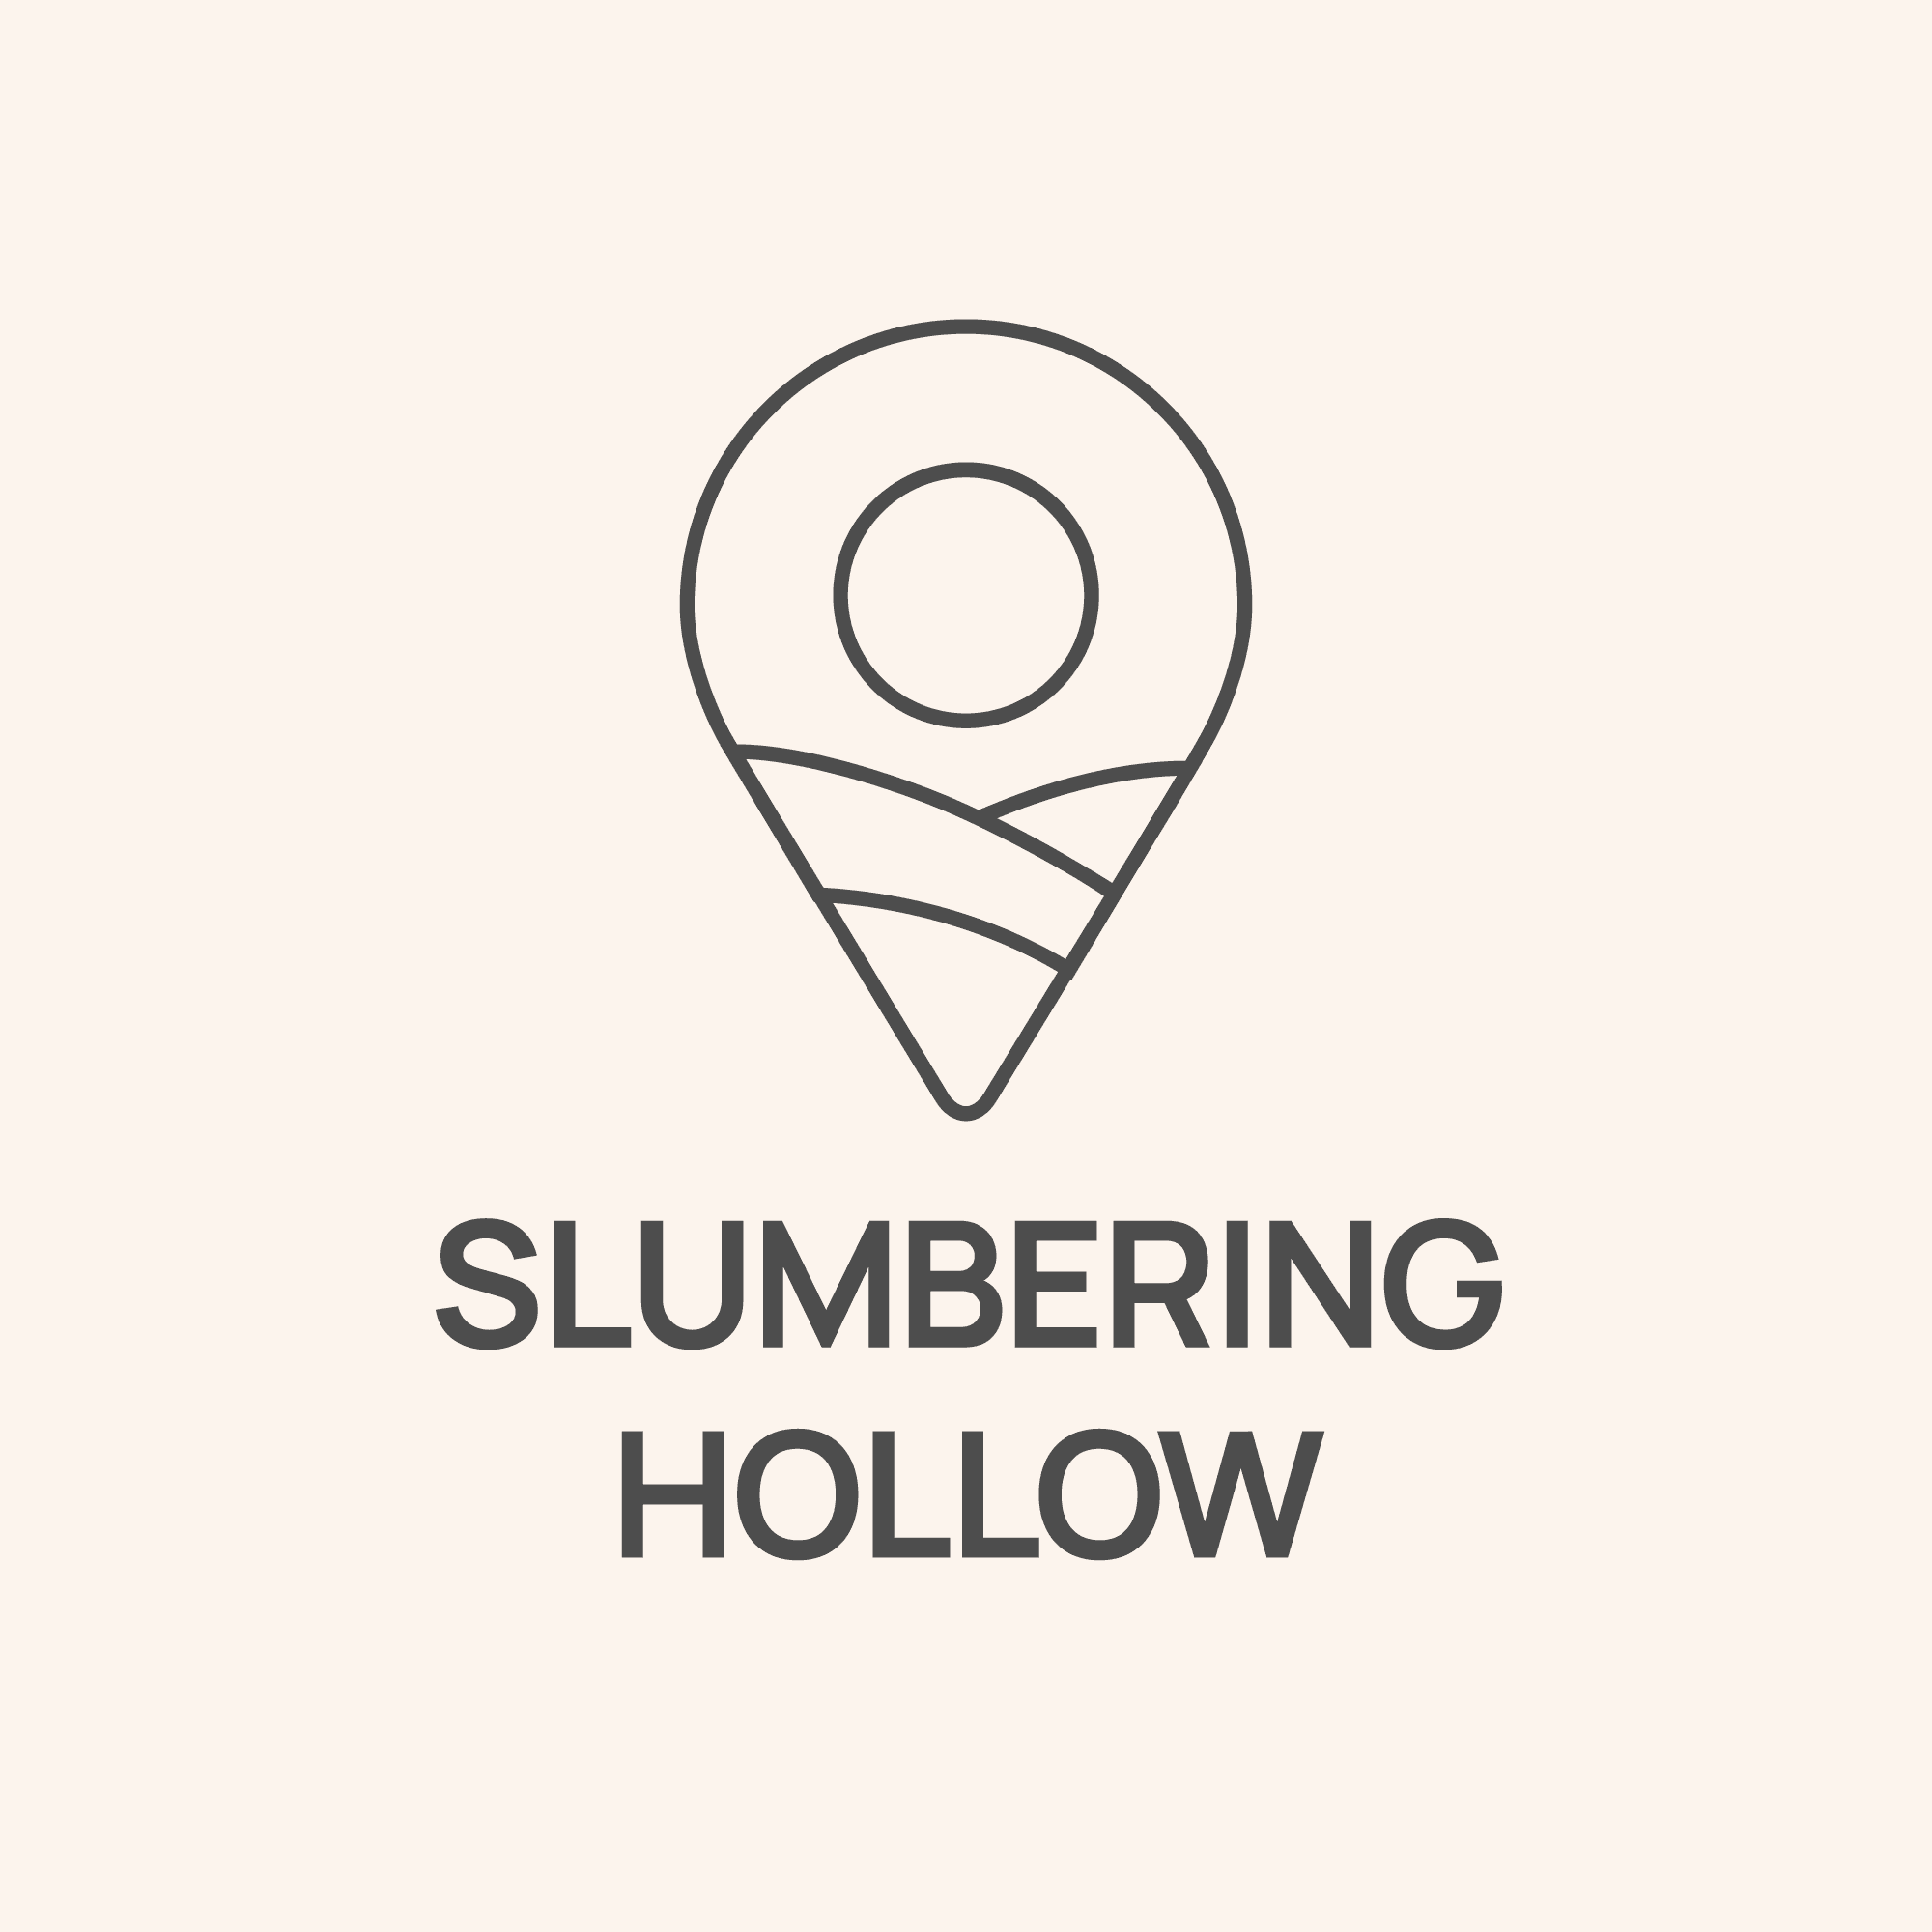 Slumbering Hollow - Minimal Art